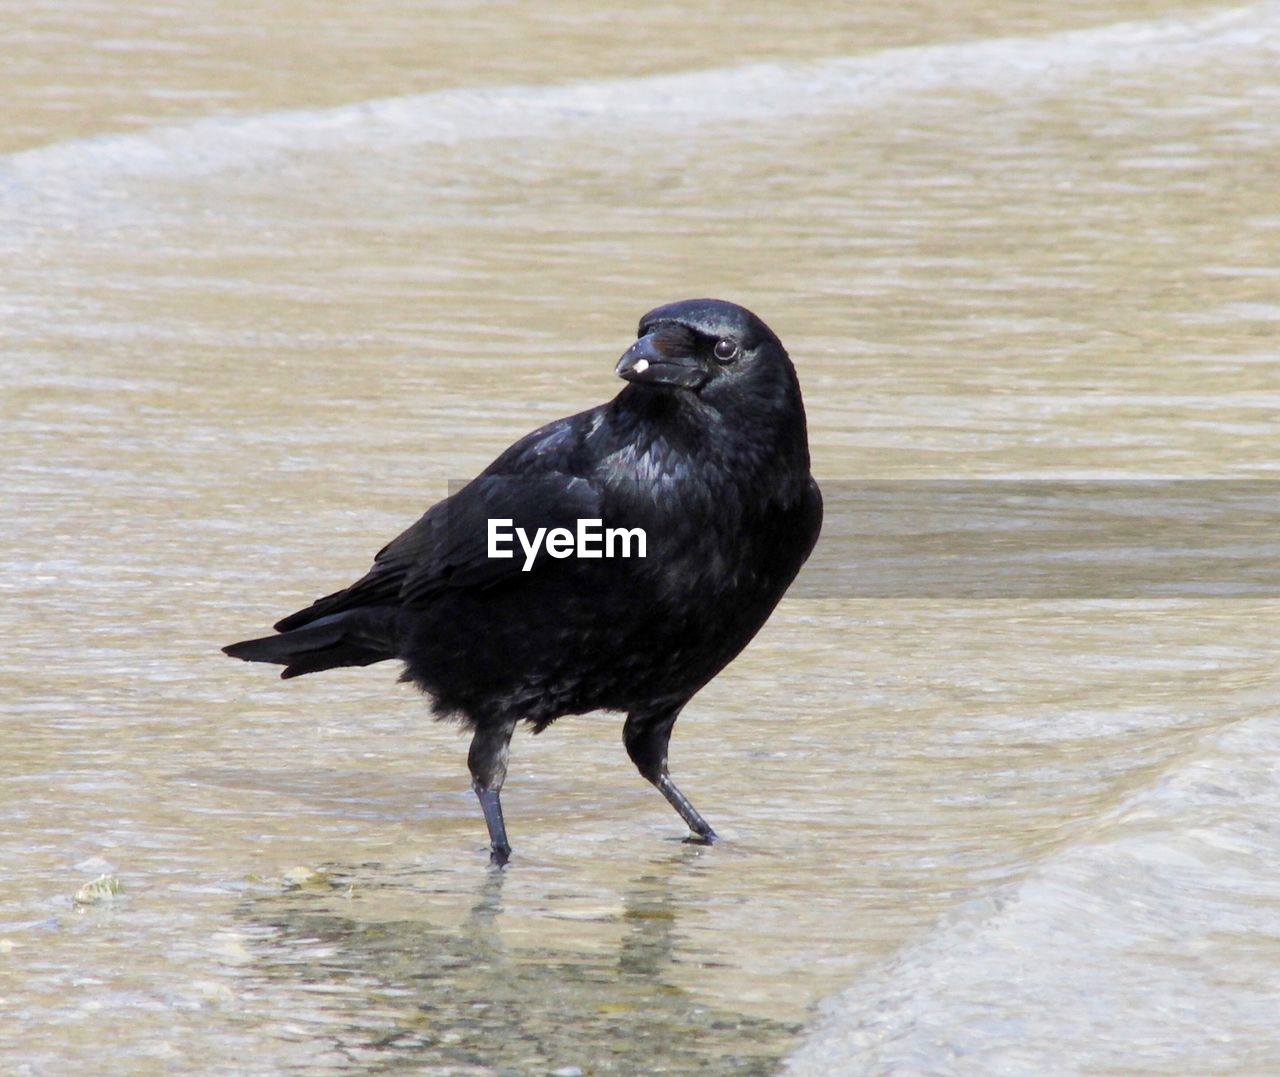 Raven perching at beach